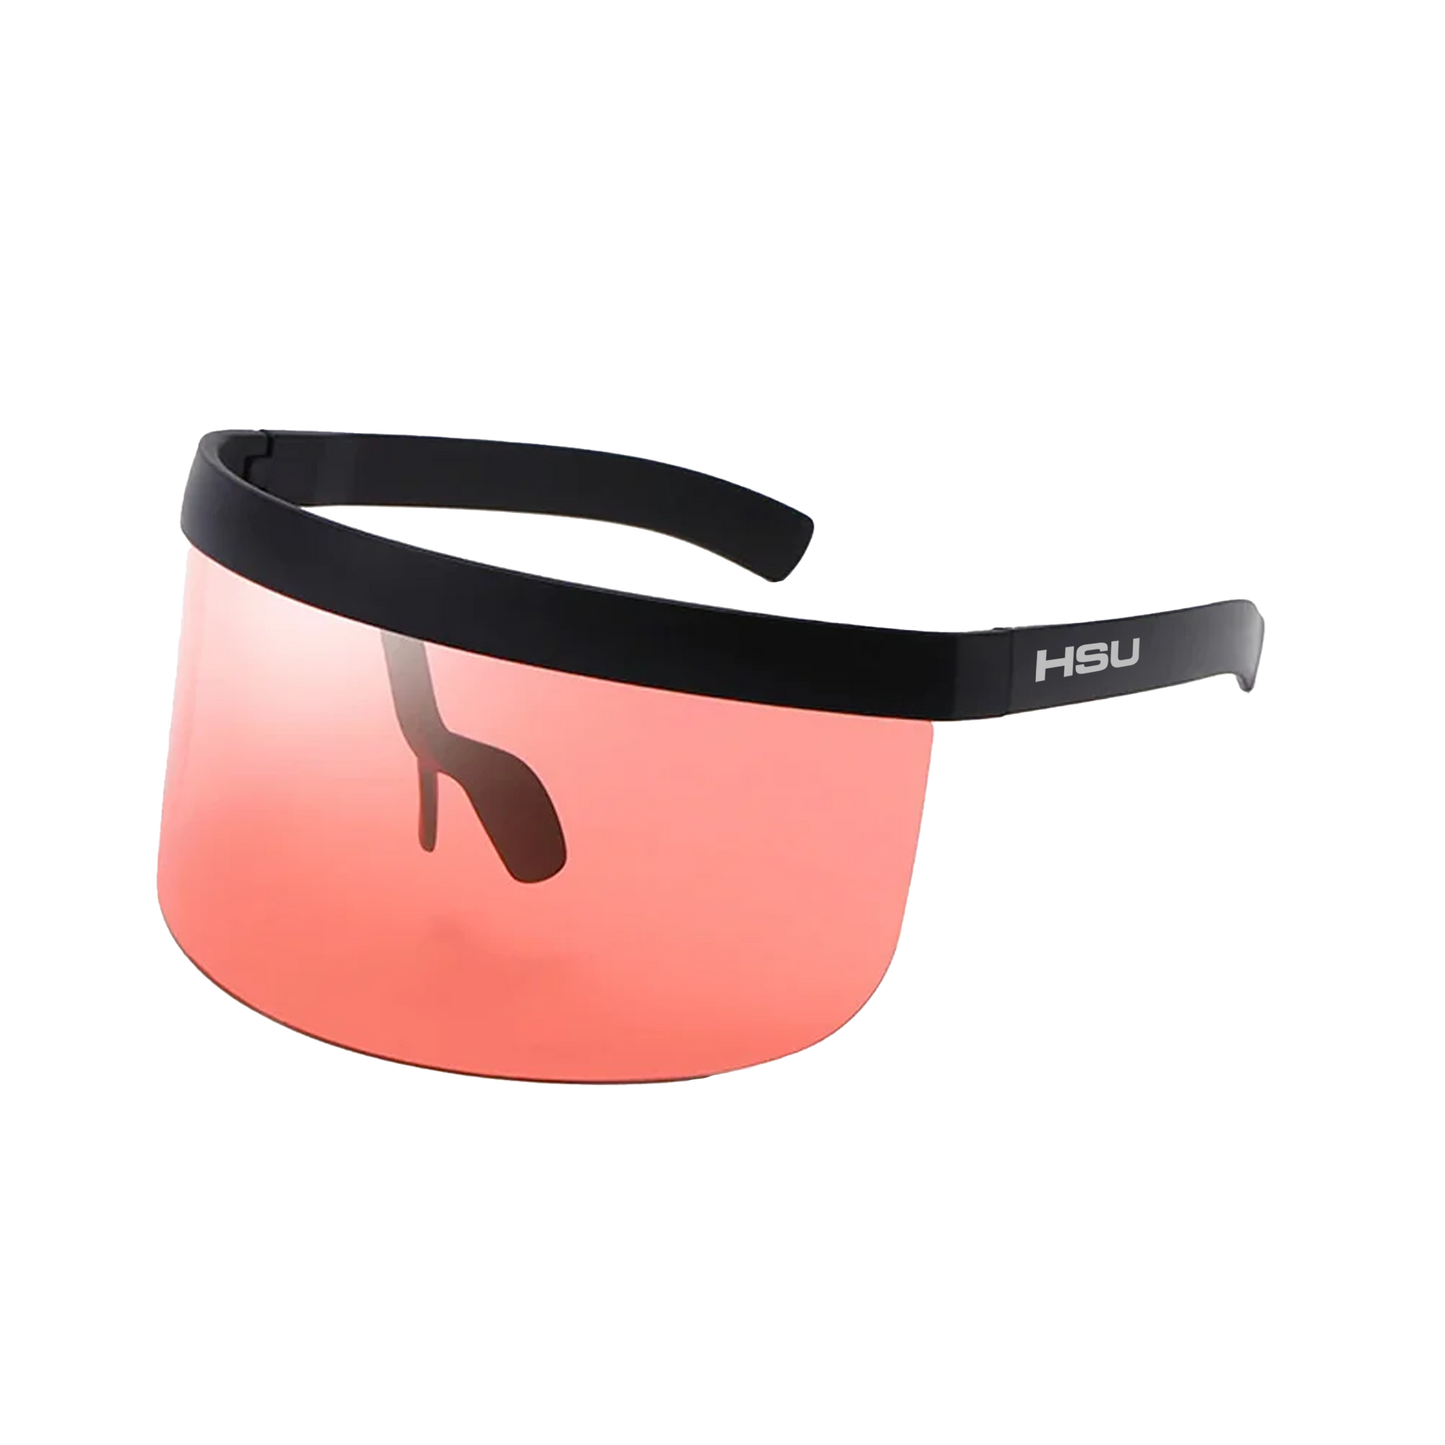 HSU Visor Sunglasses x Pink Lens